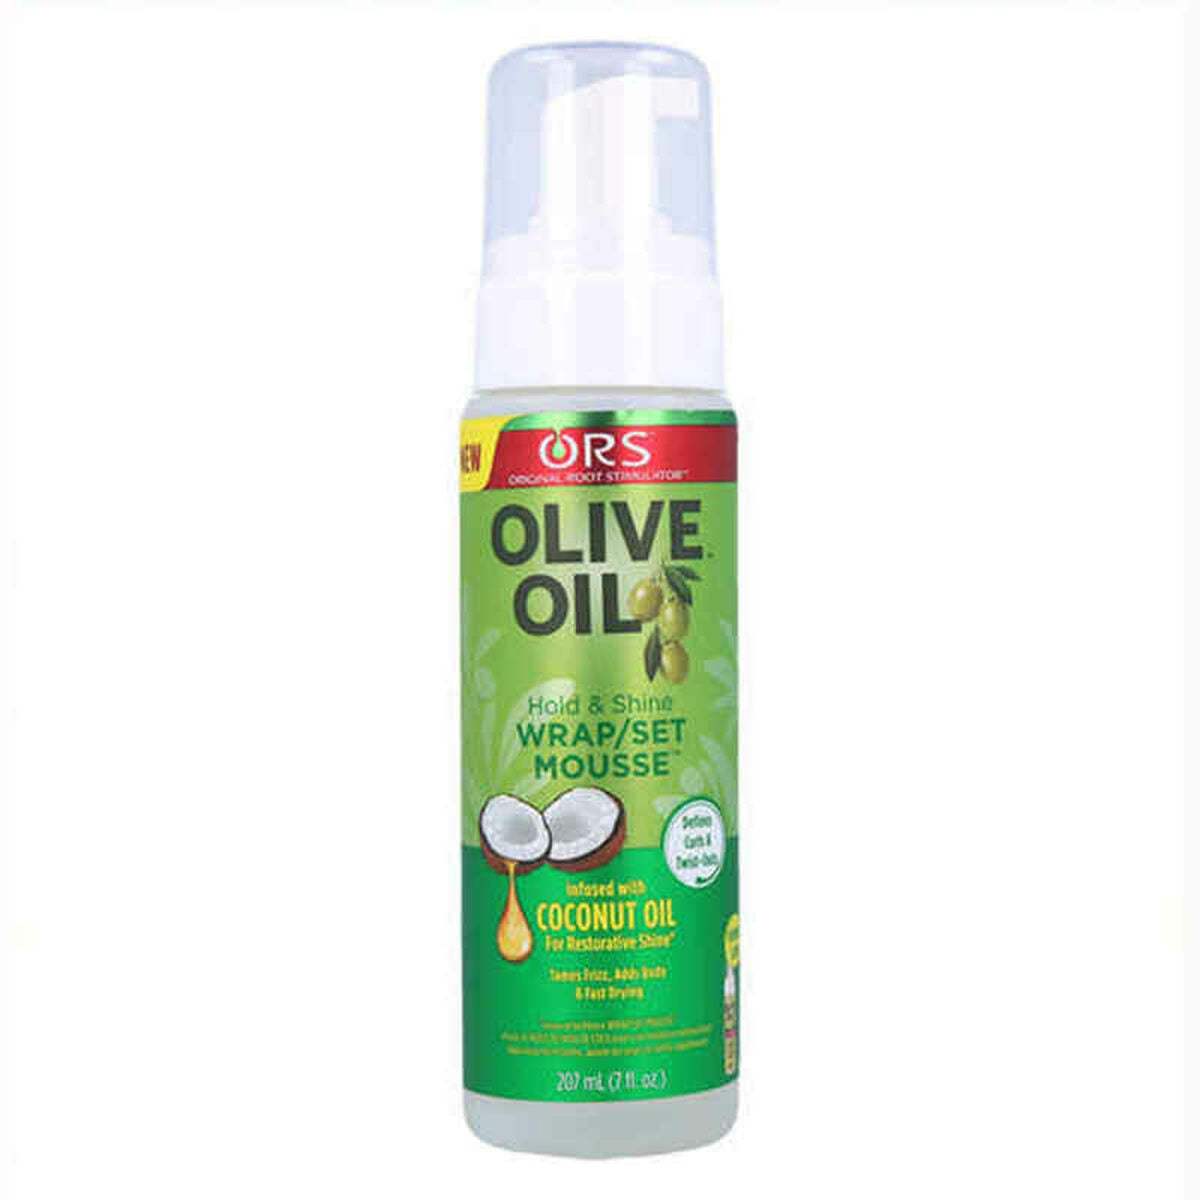 Hidratant Ors Olive Oil Wrap Ors (207 ml)